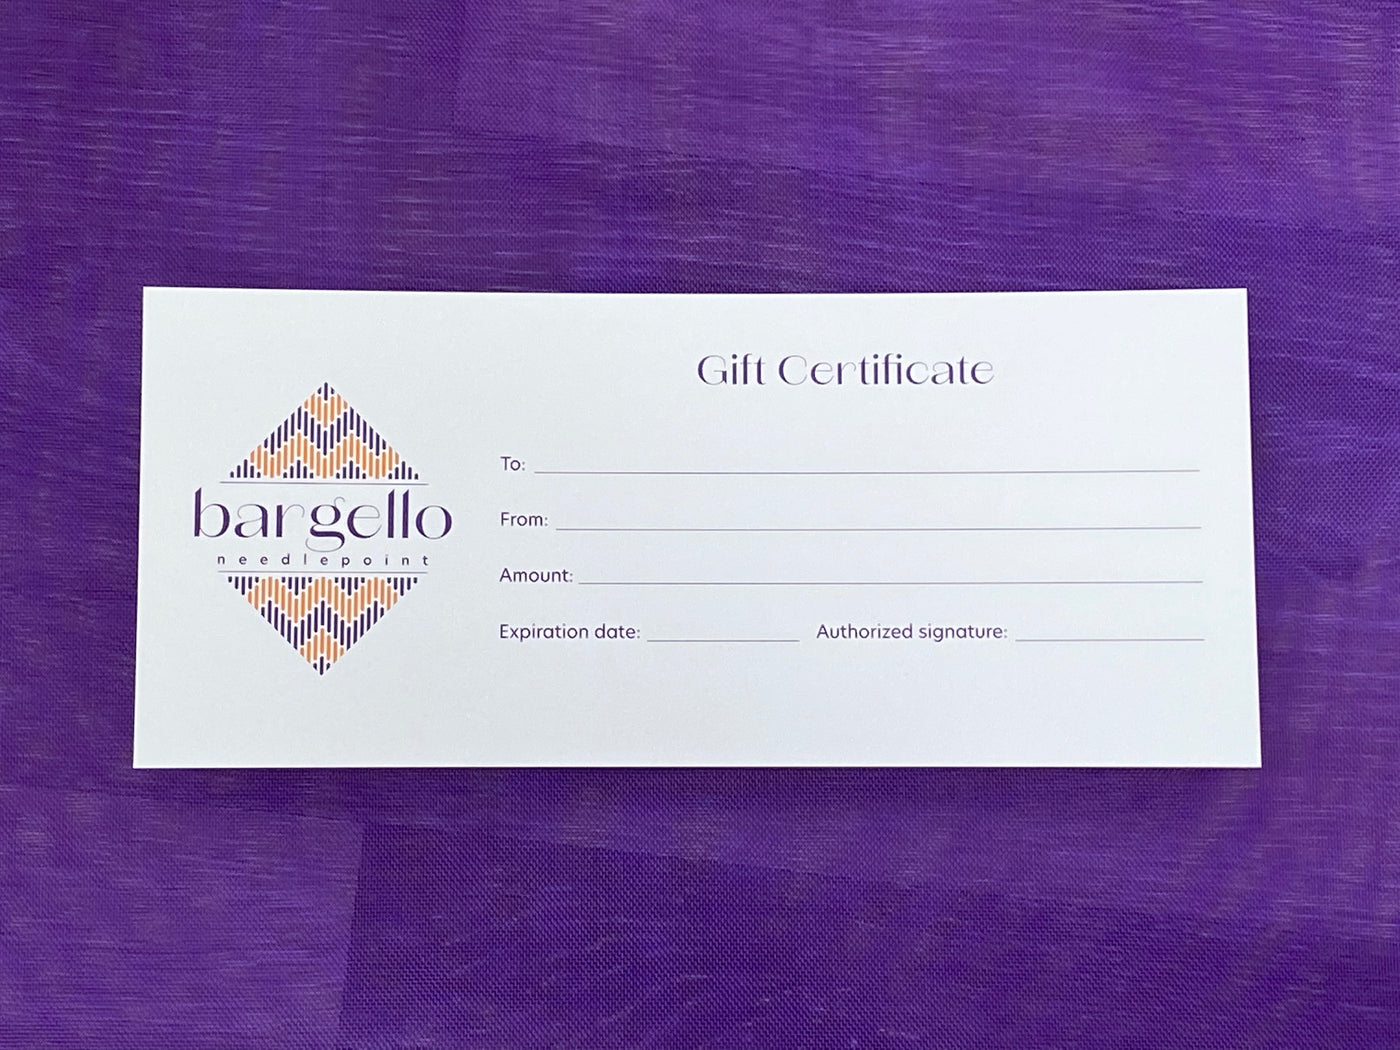 Bargello Needlepoint Gift Card